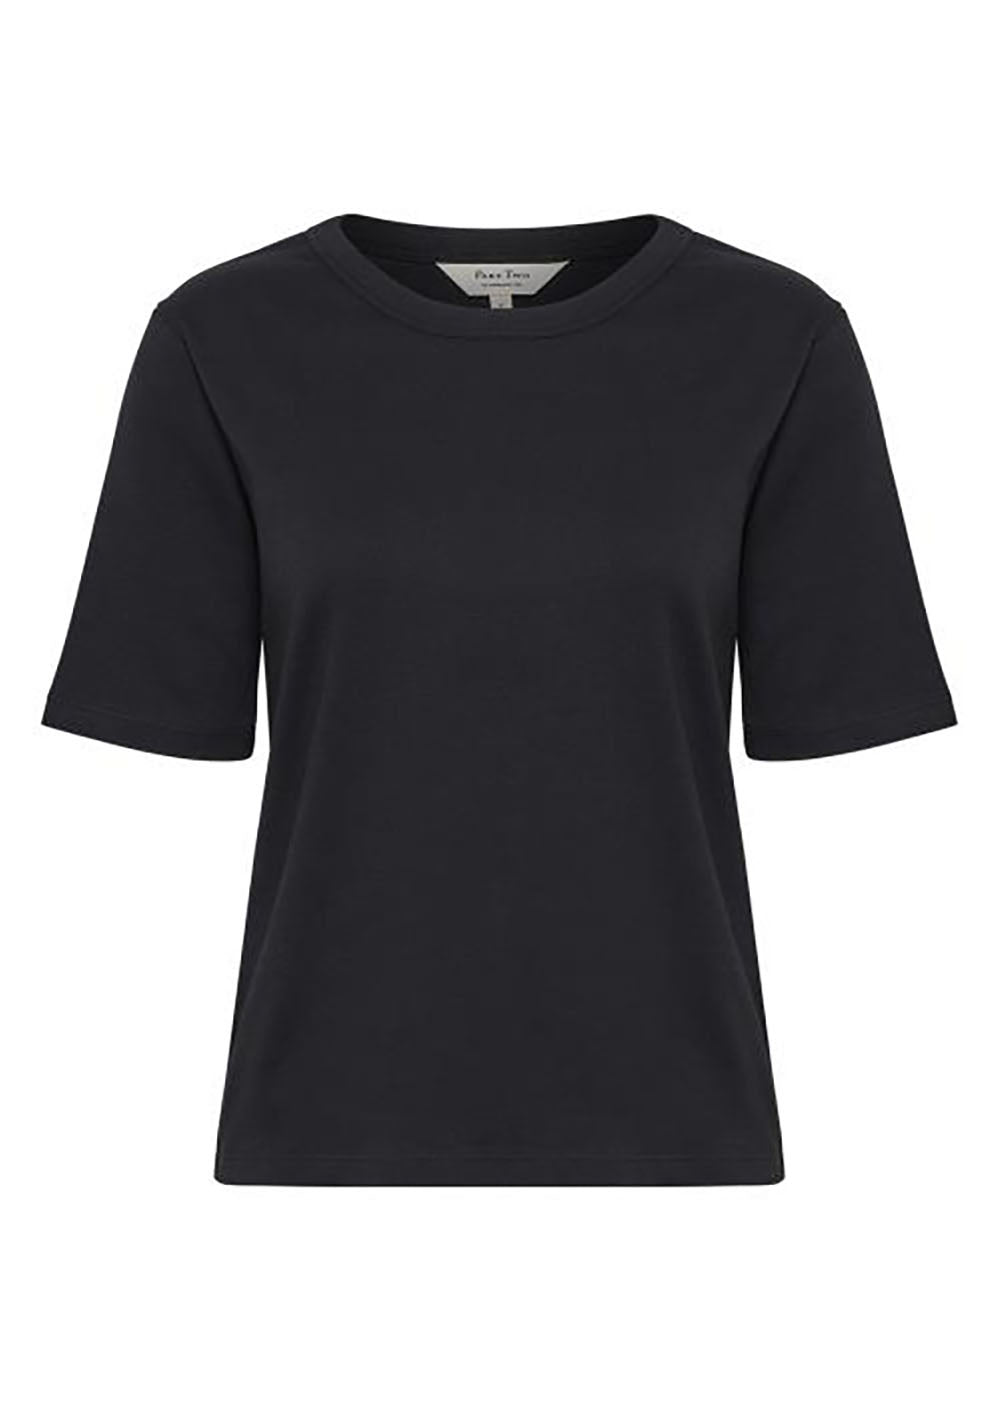 Ratana T-Shirt - Black - Part Two Canada - Danali - 64903 - 30307808